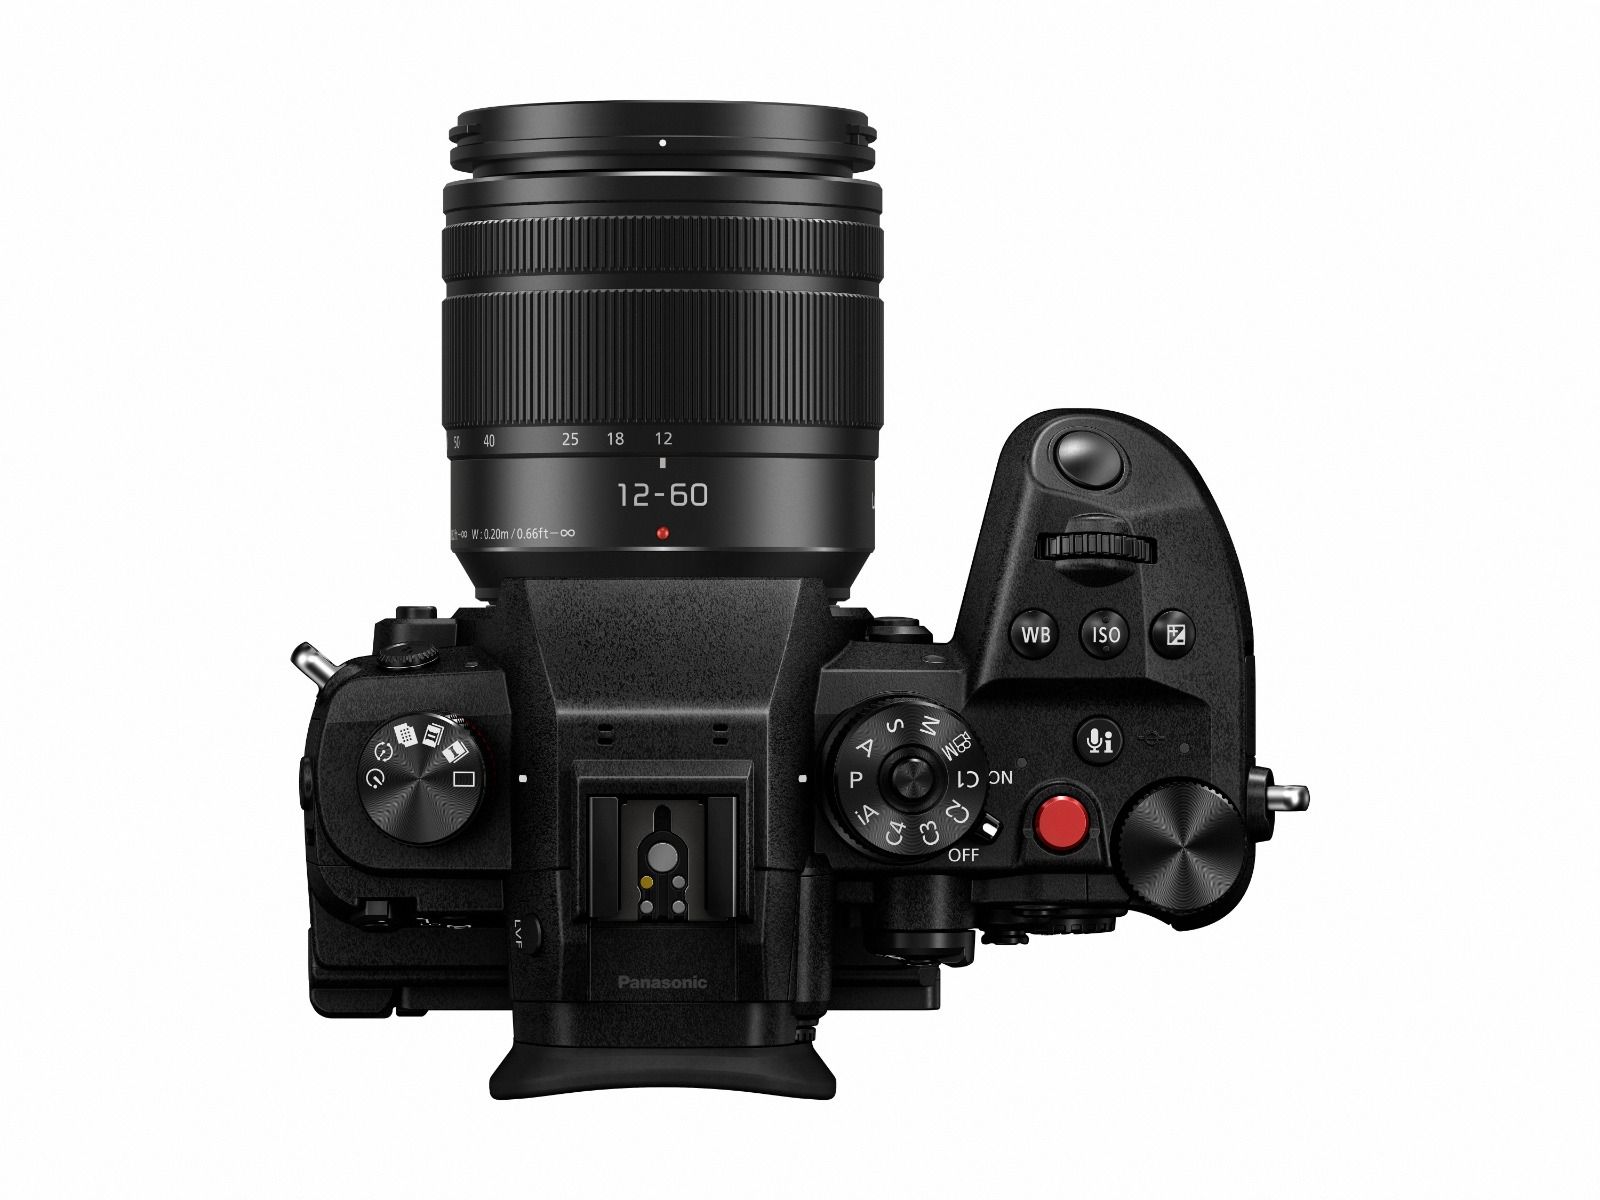 Panasonic Lumix GH6 Camera with 12-60mm f3.5-5.6 Lens Kit